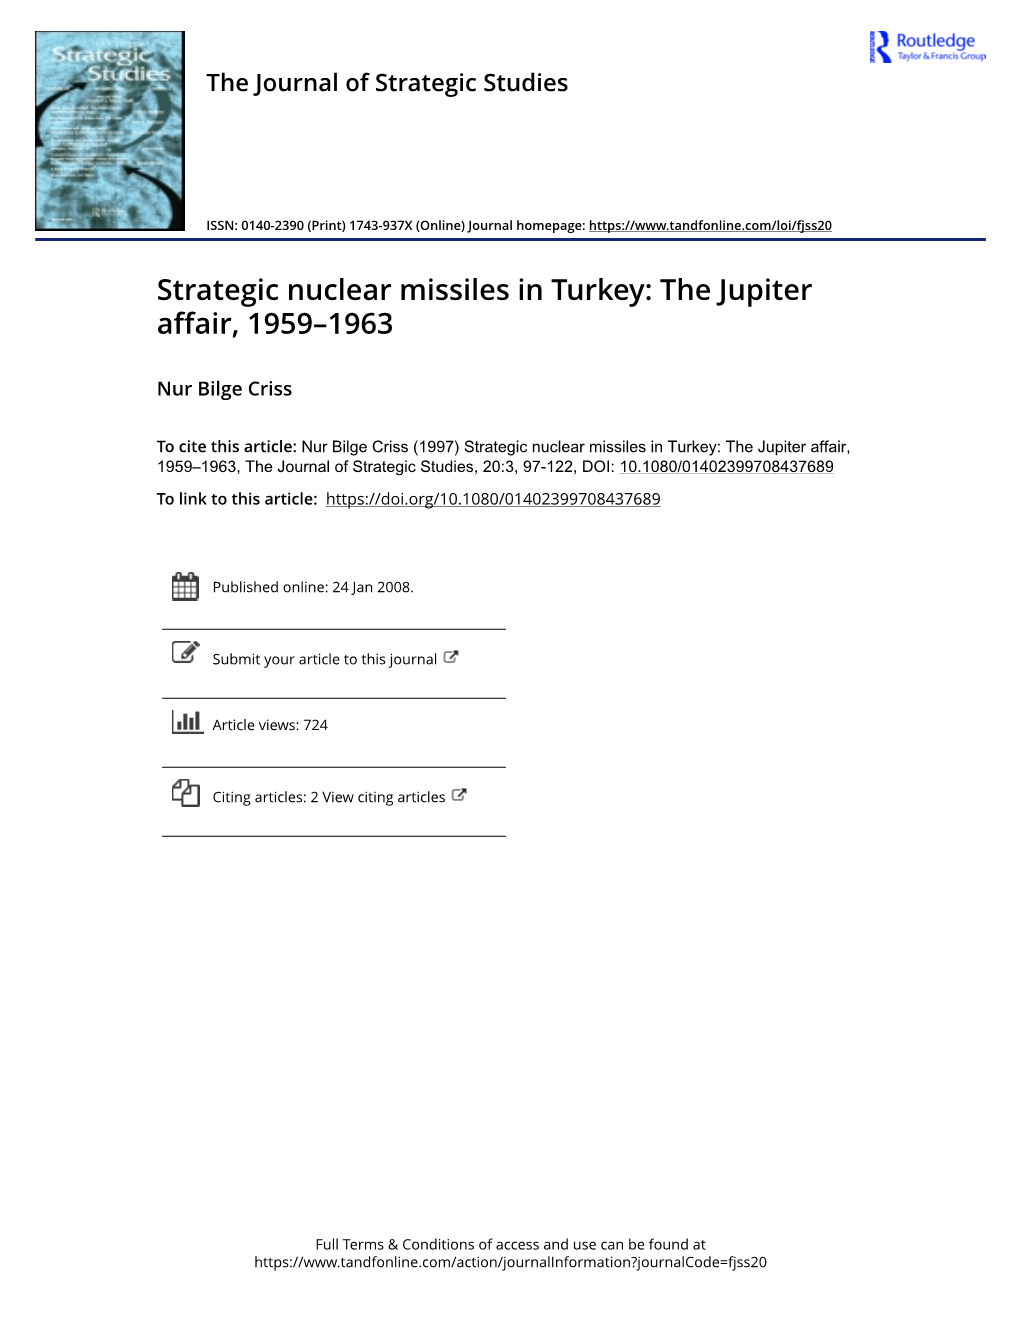 Strategic Nuclear Missiles in Turkey: the Jupiter Affair, 1959–1963